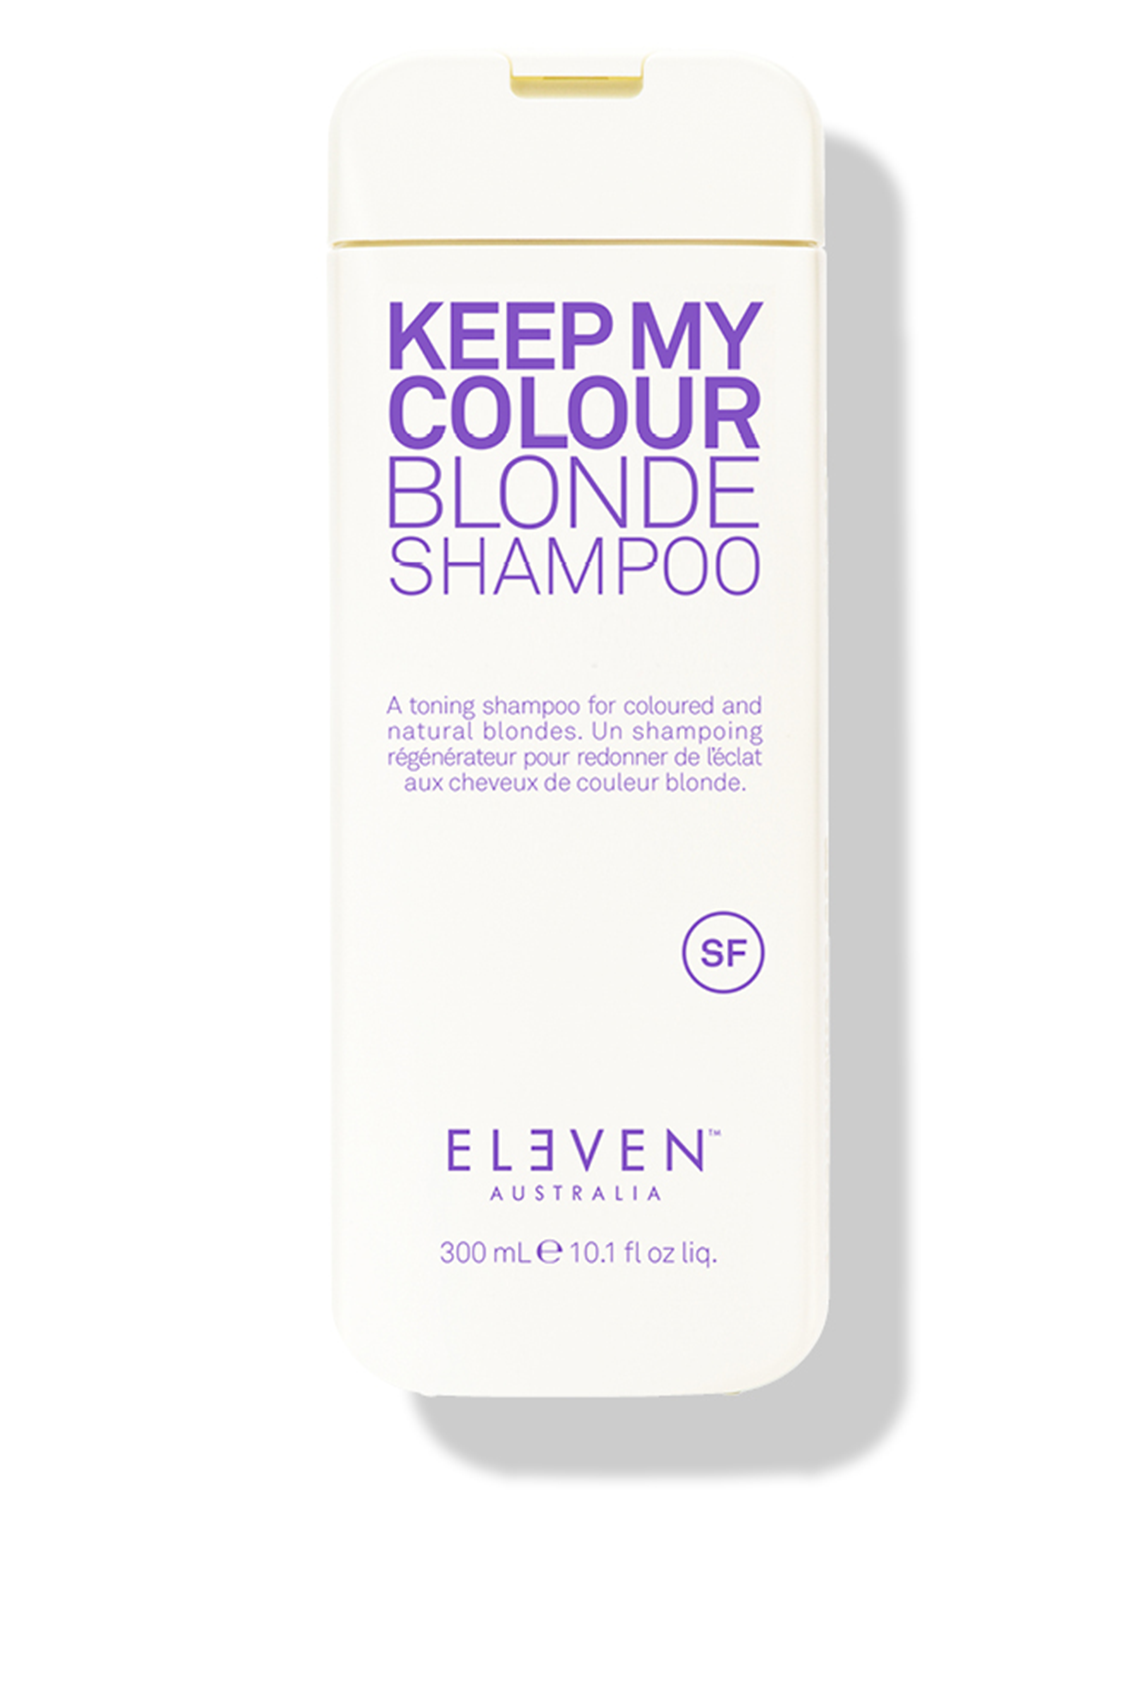 Eleven Australia keep my blonde shampoo